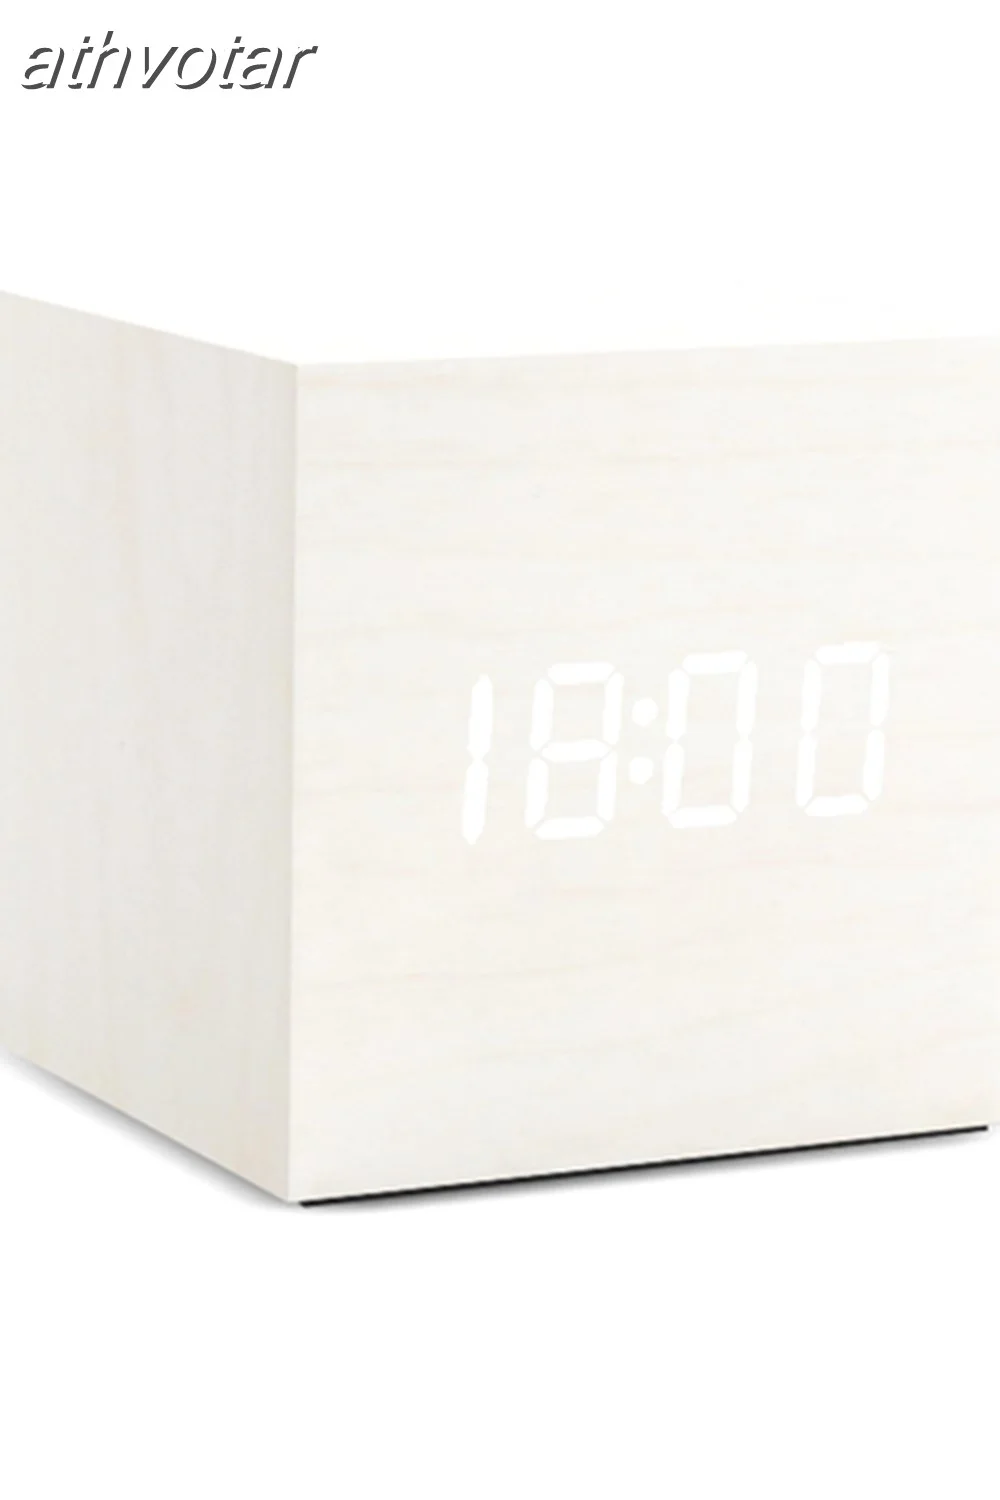 athvotar Clock LED Wooden Table Clock Decor Voice Control Digita Wood Despertador USB/AAA Powered Electronic Desktop Decor Clocks